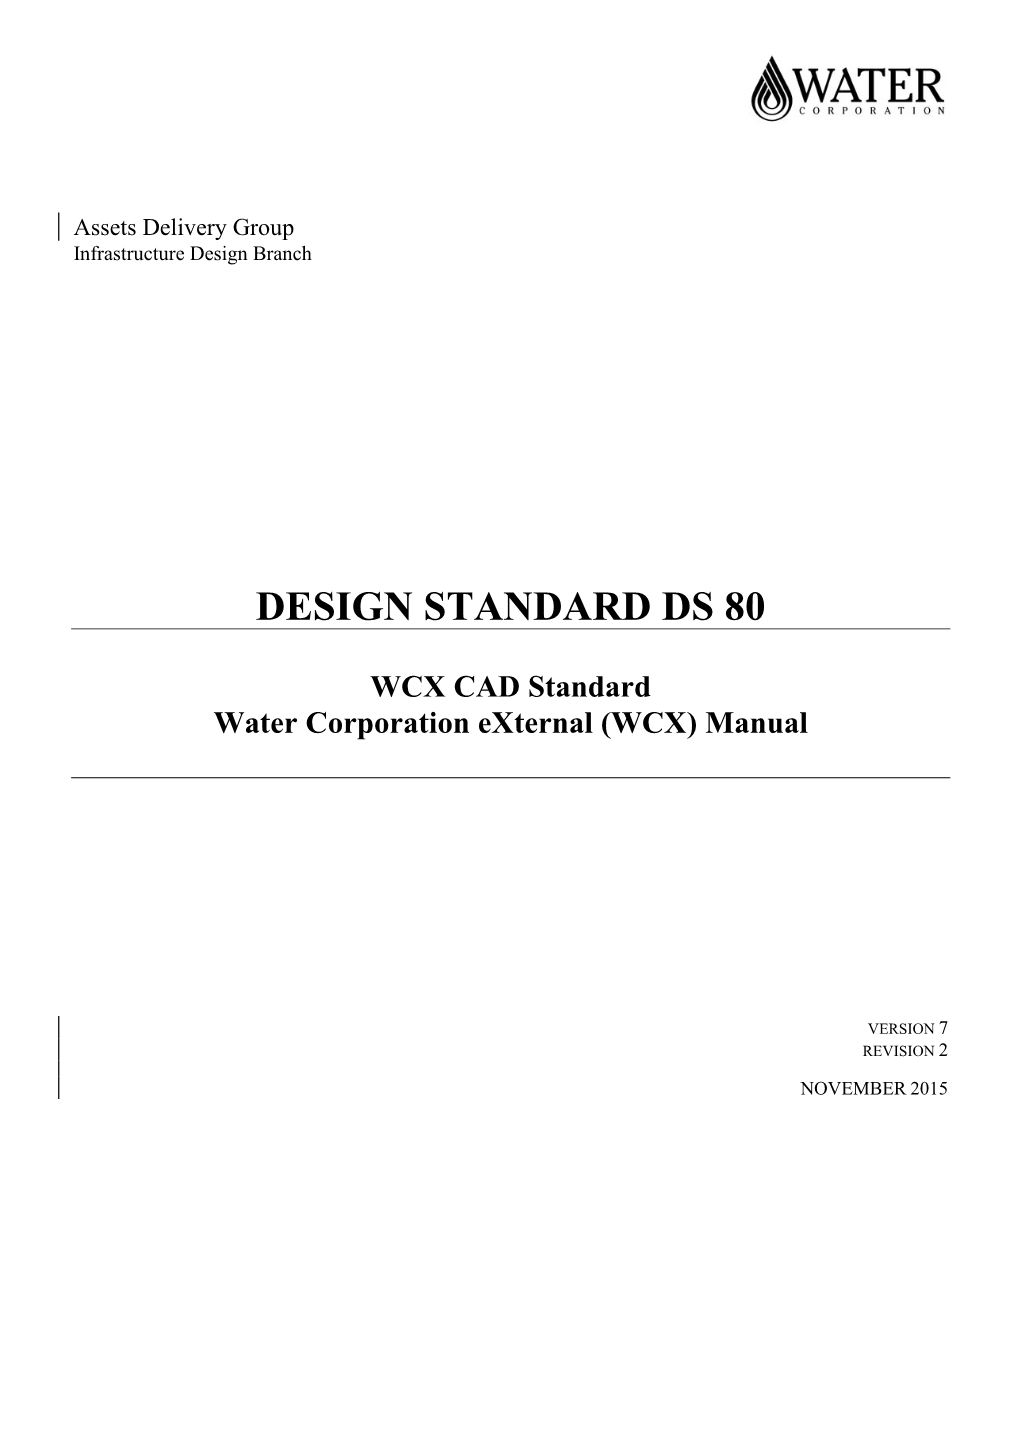 Design Standard Ds 80